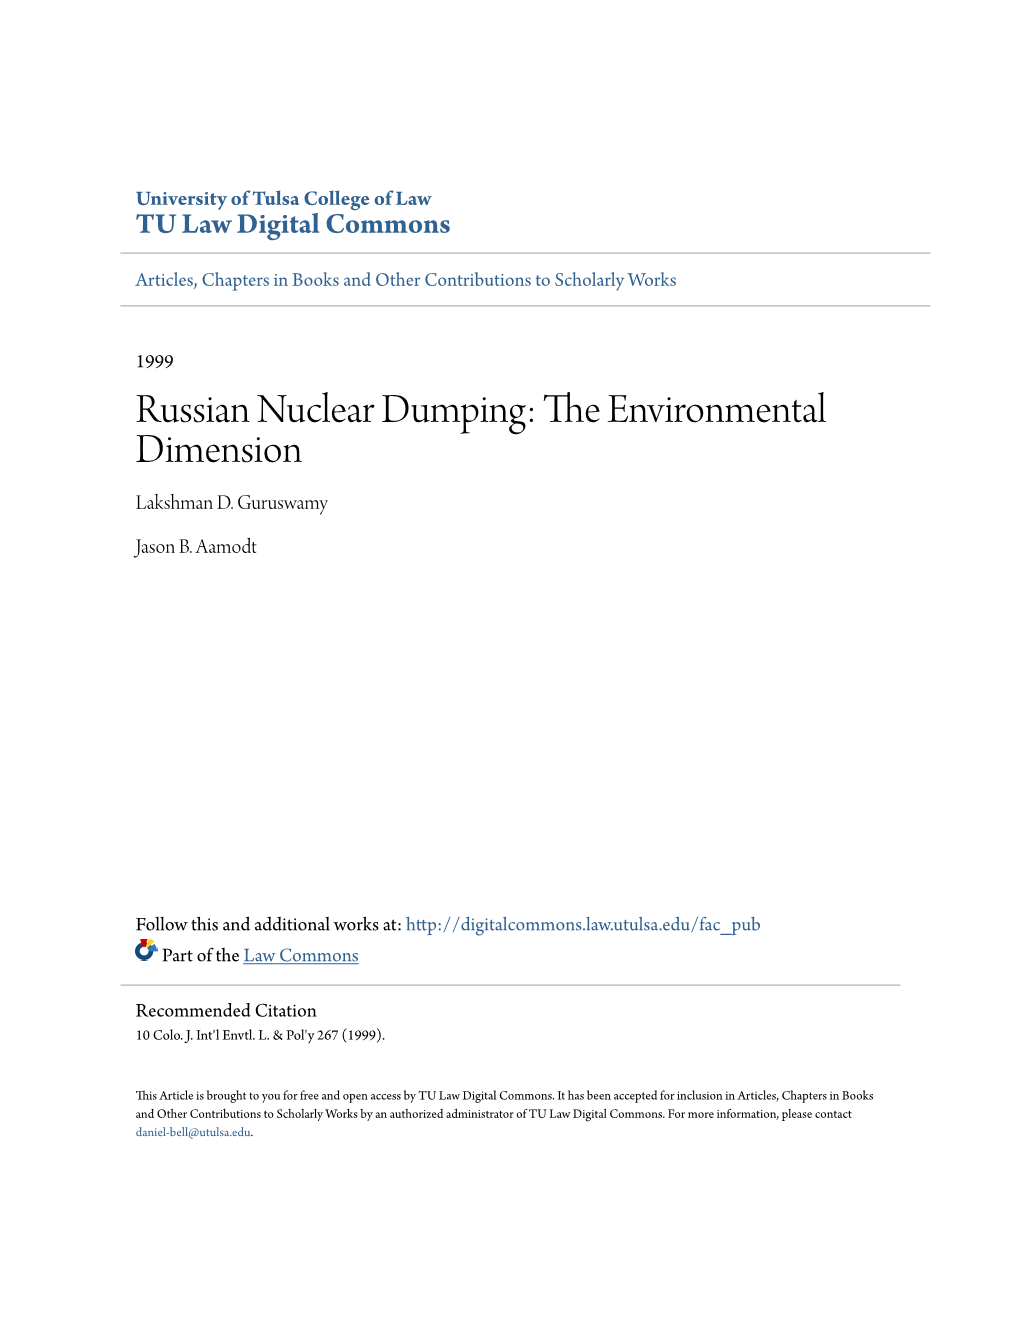 Russian Nuclear Dumping: the Ne Vironmental Dimension Lakshman D